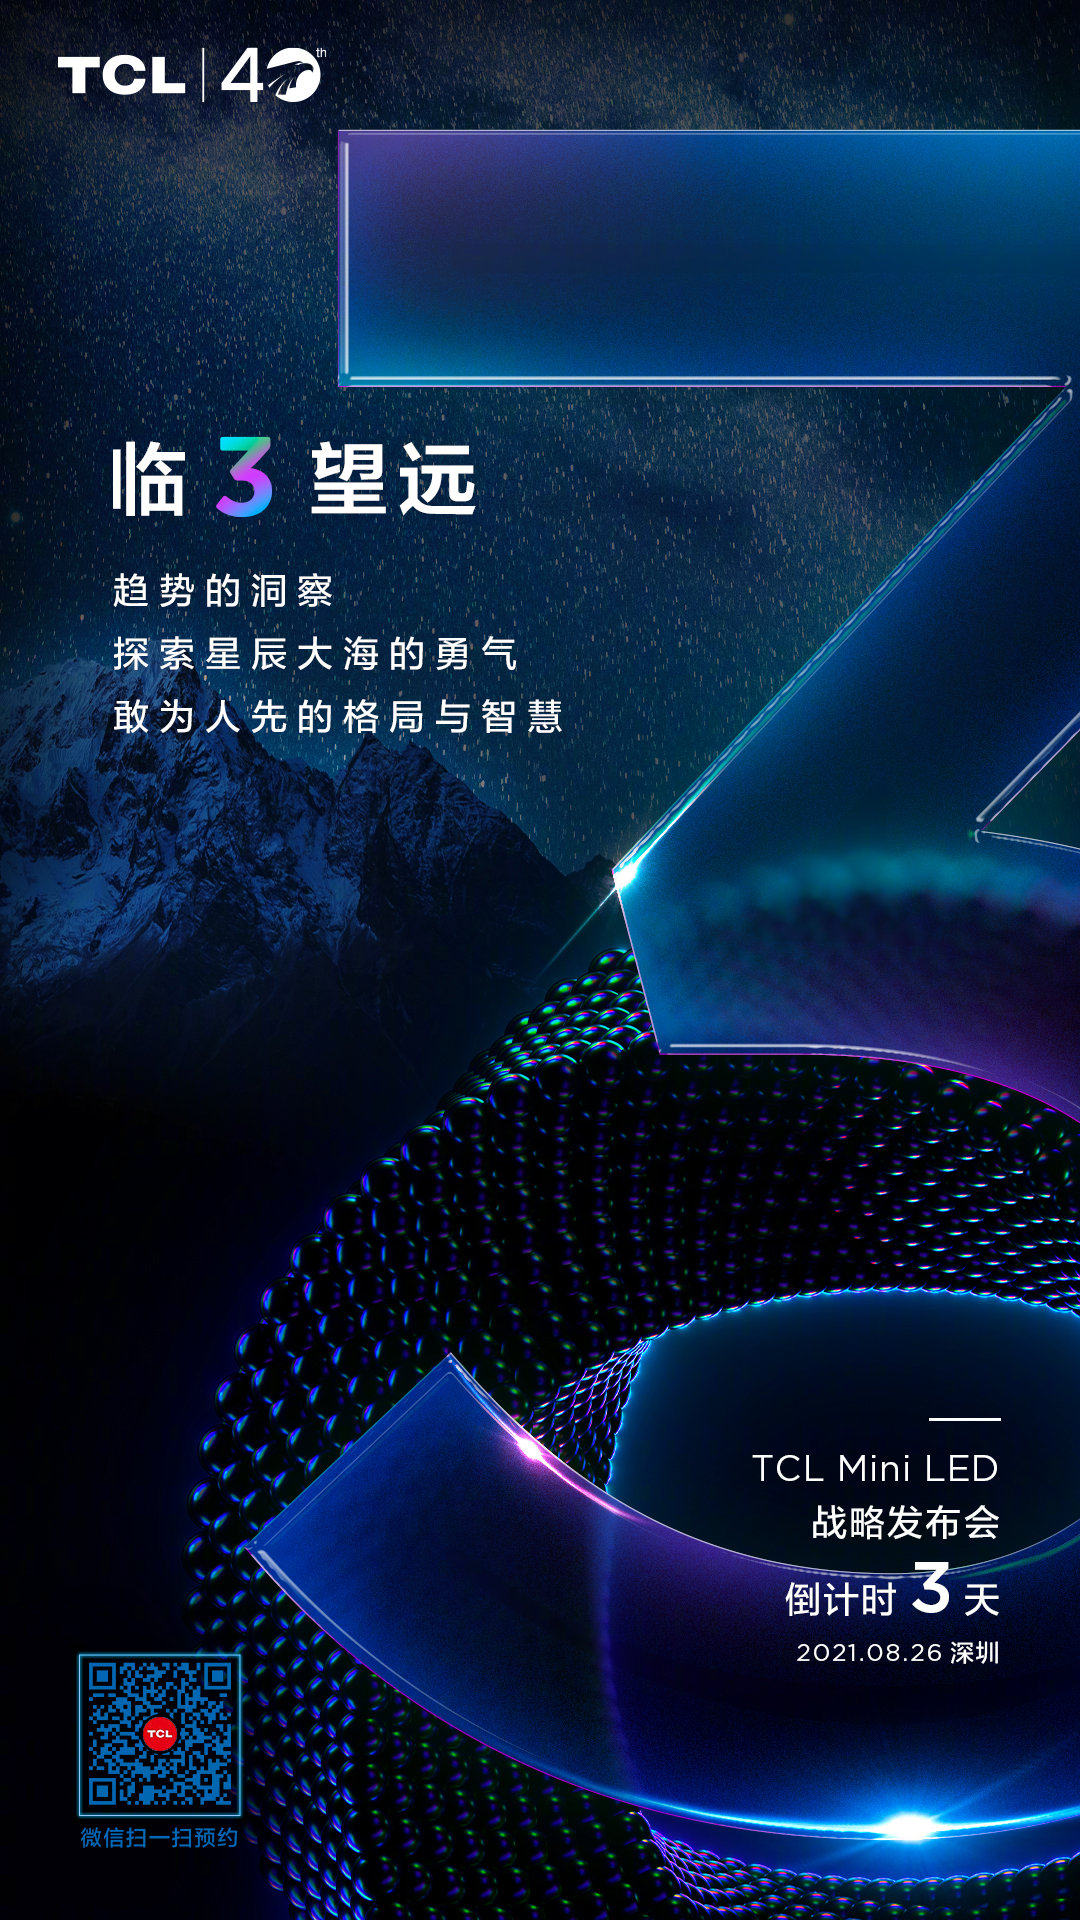 TCL Mini LED战略发布会将于8月26日举行